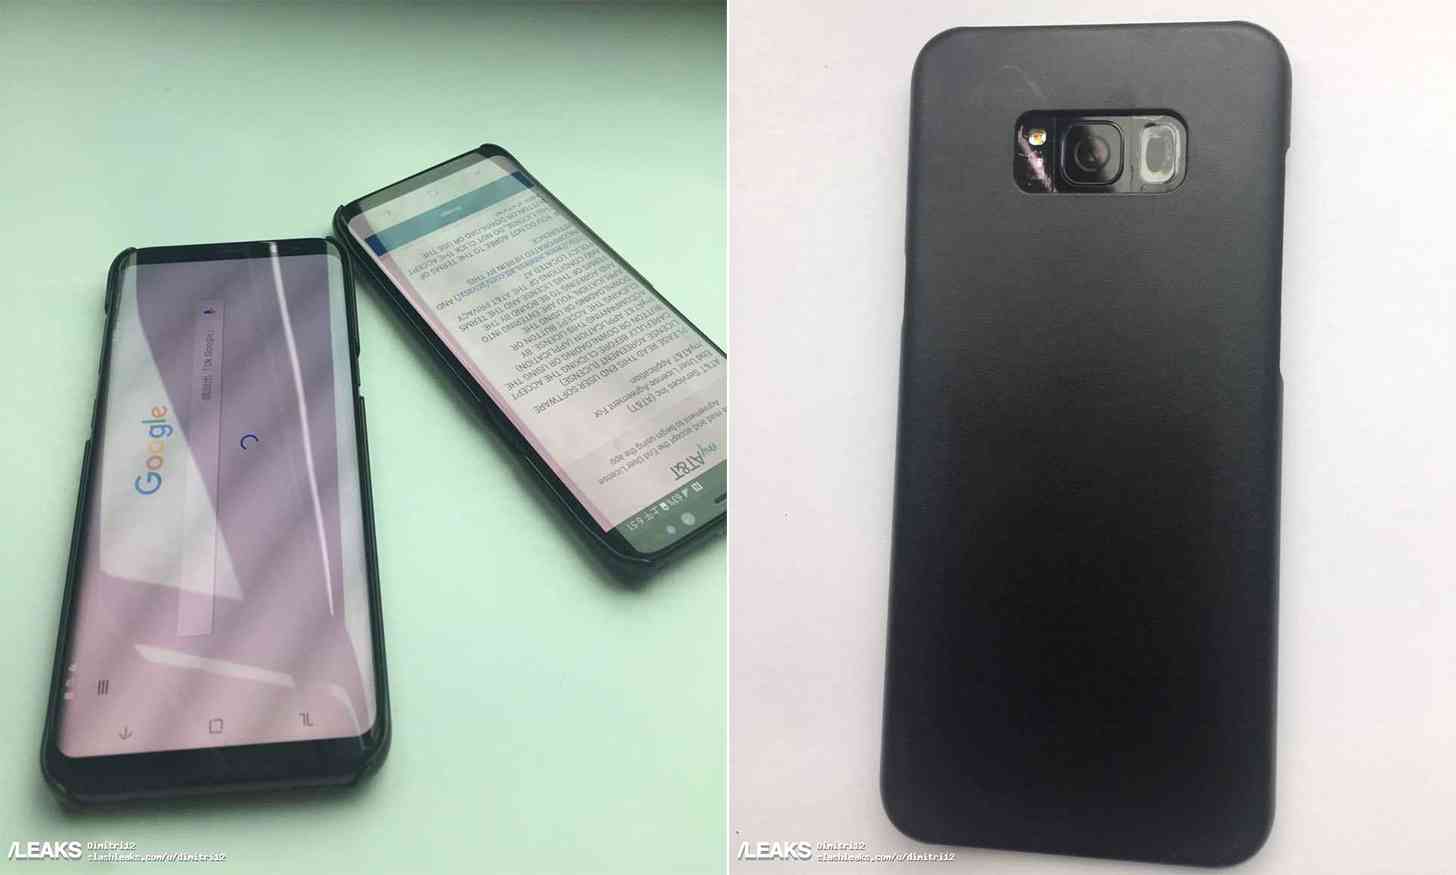 Samsung Galaxy S8, Galaxy S8+ photos leak